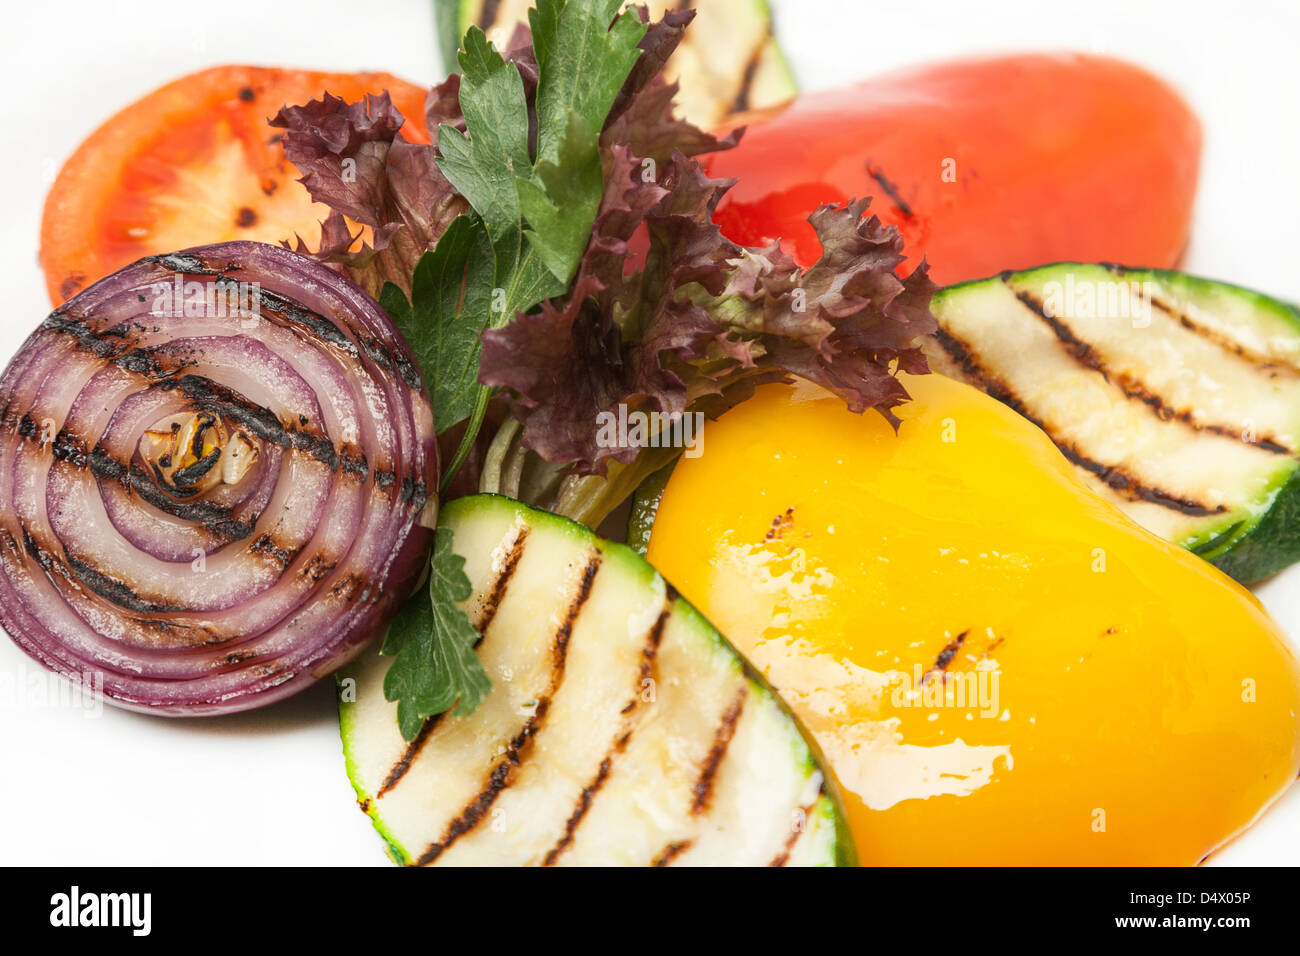 Caldo colore grigliata di verdure fresche per guarnire Foto Stock